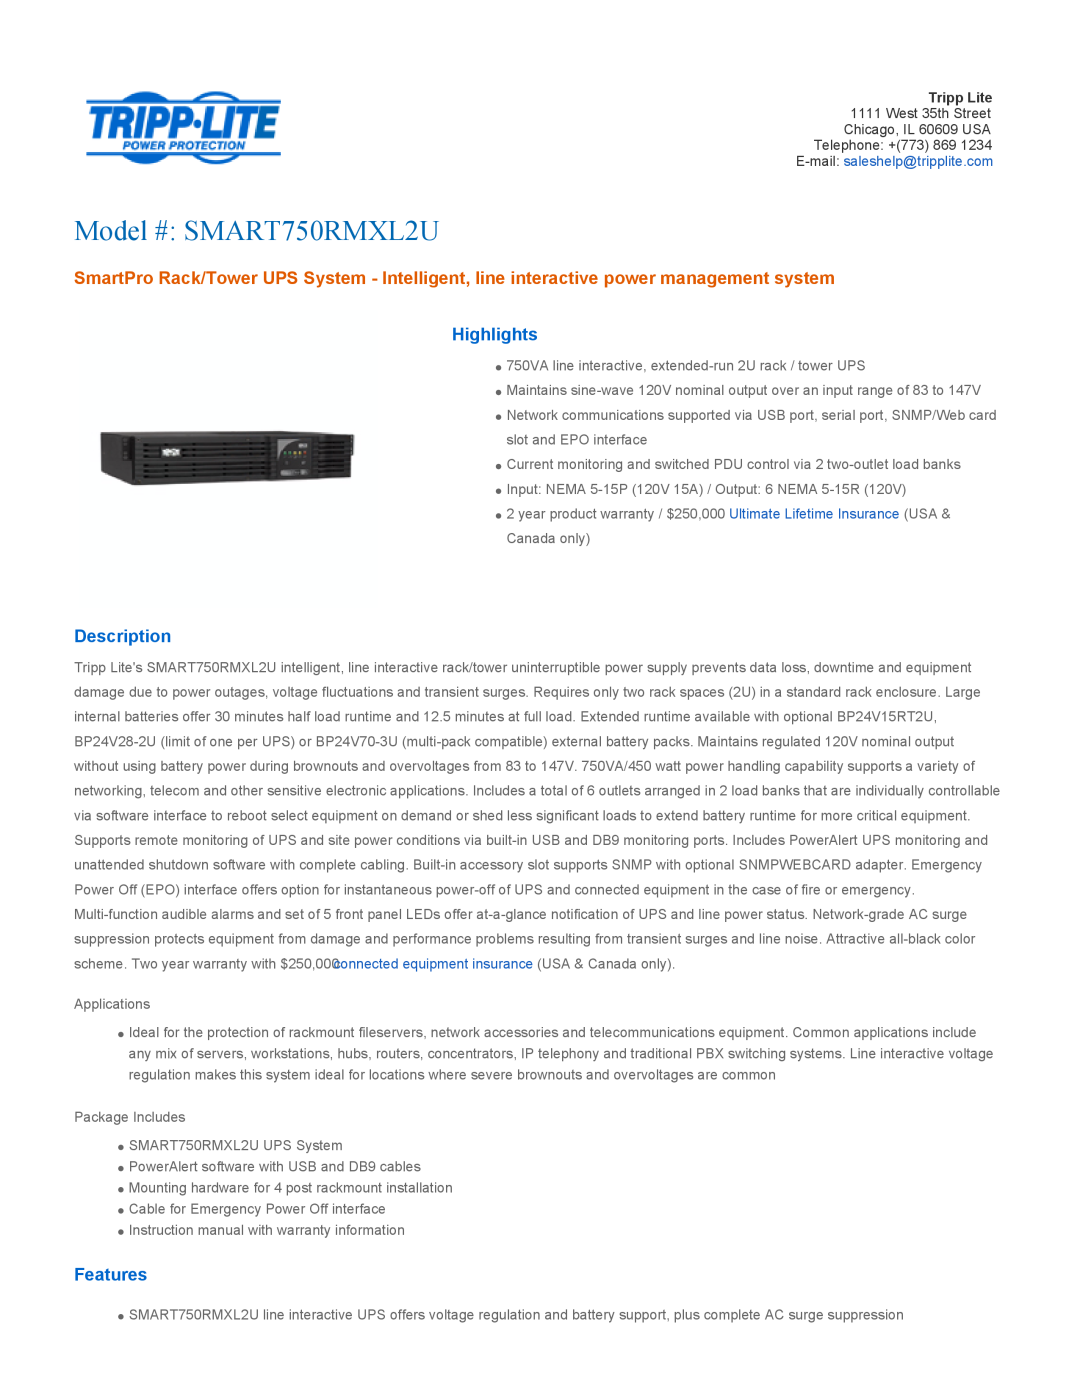 Tripp Lite warranty Highlights, Description, Features, Model # SMART750RMXL2U 